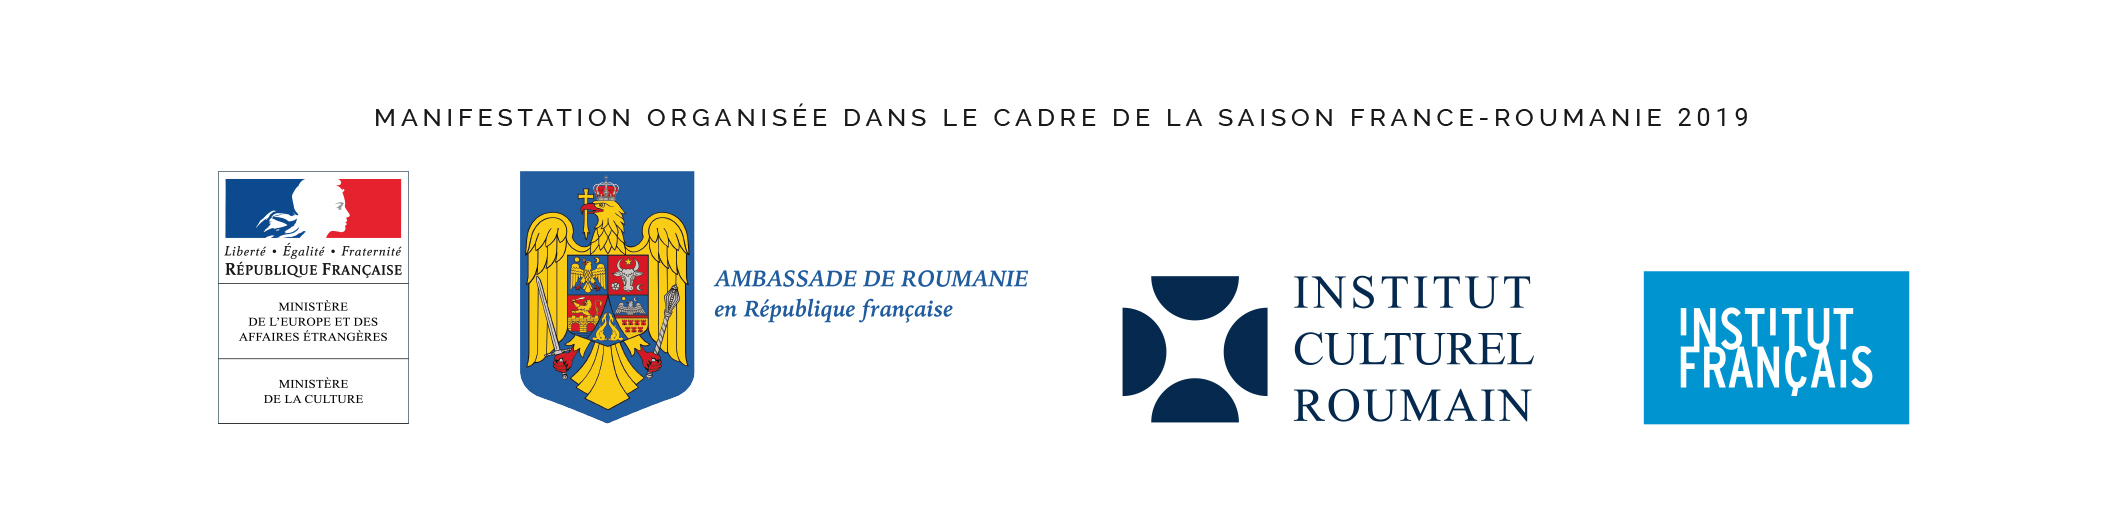 Logos partenaires Saison France-Roumanie 2019